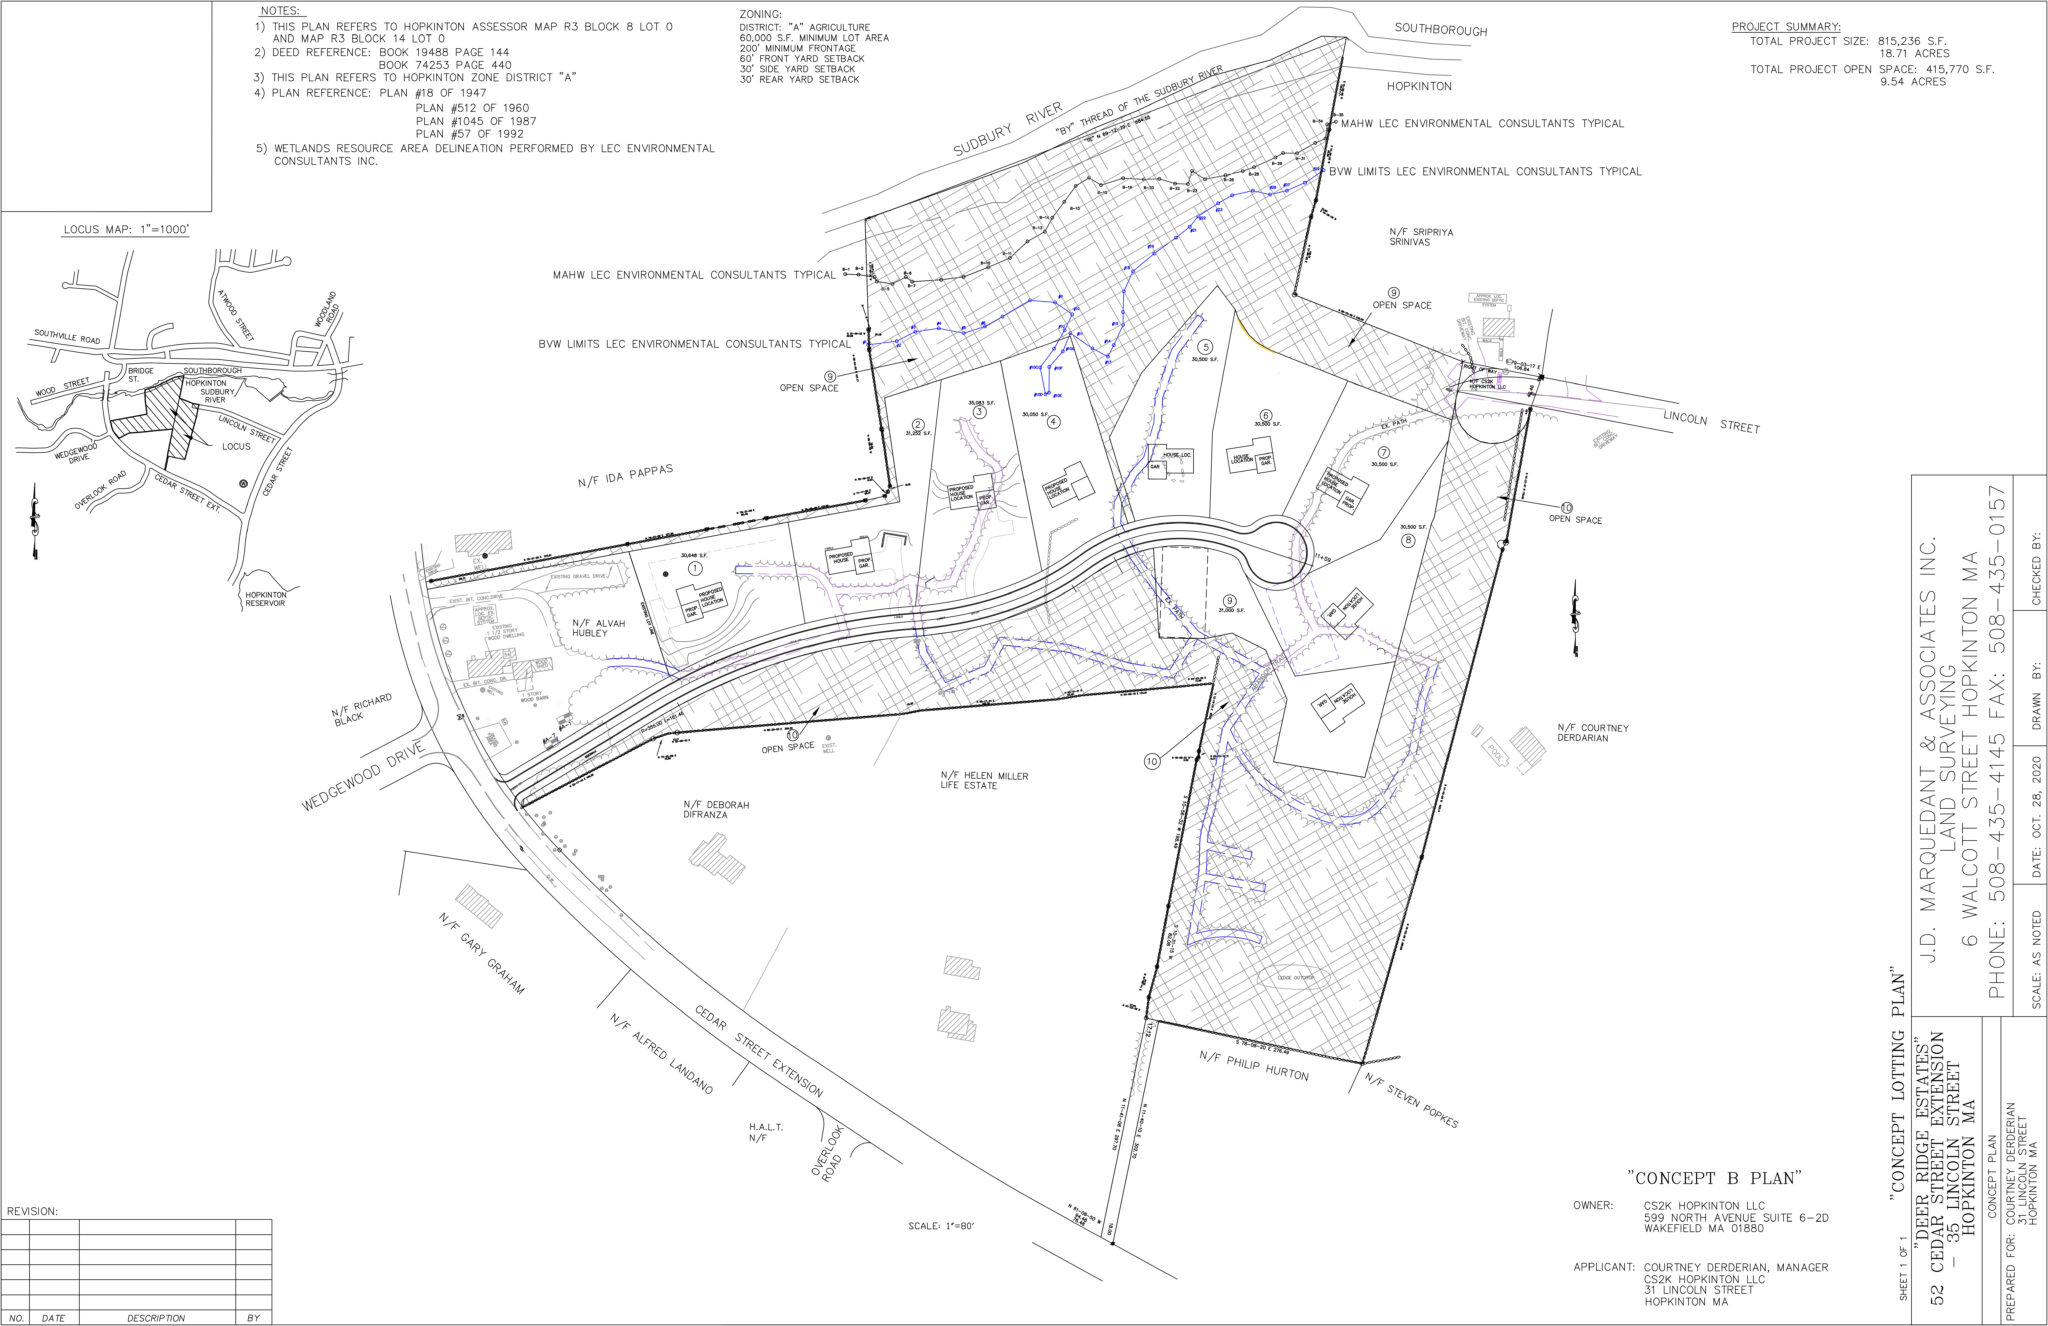 Planning Board approves Turkey Ridge subdivision plan